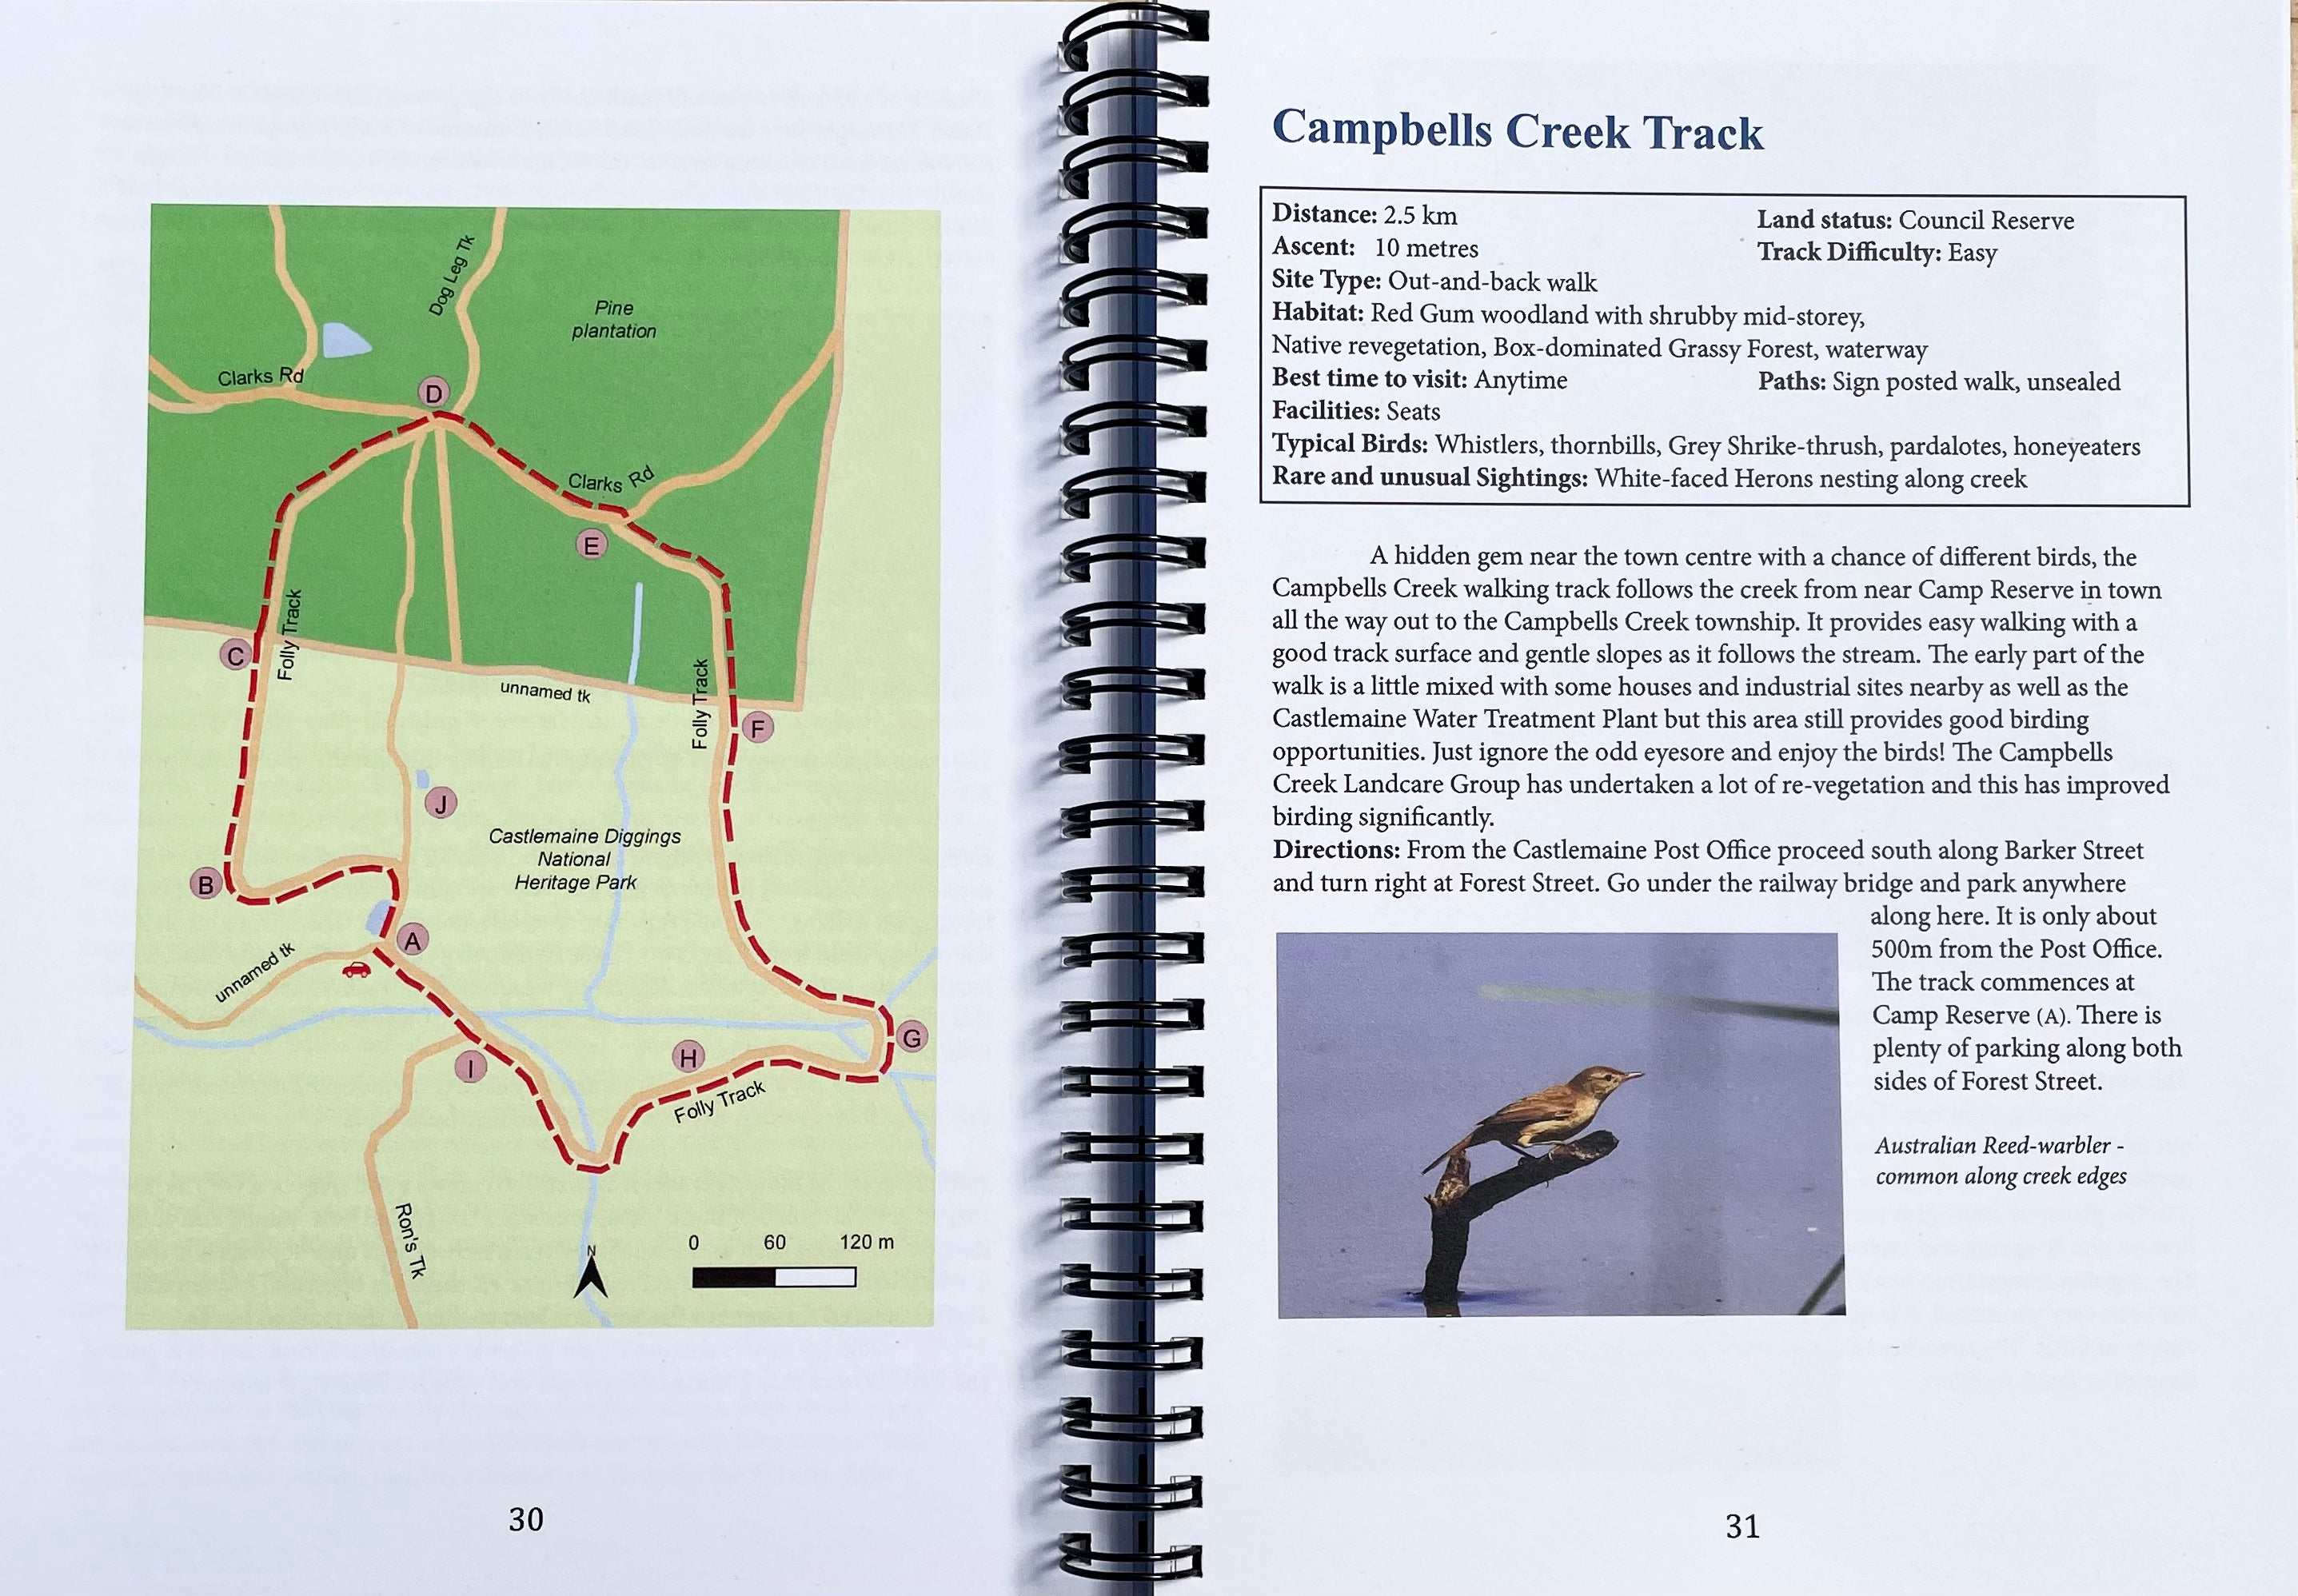 Book - Castlemaine Bird Walks by Damian Kelly